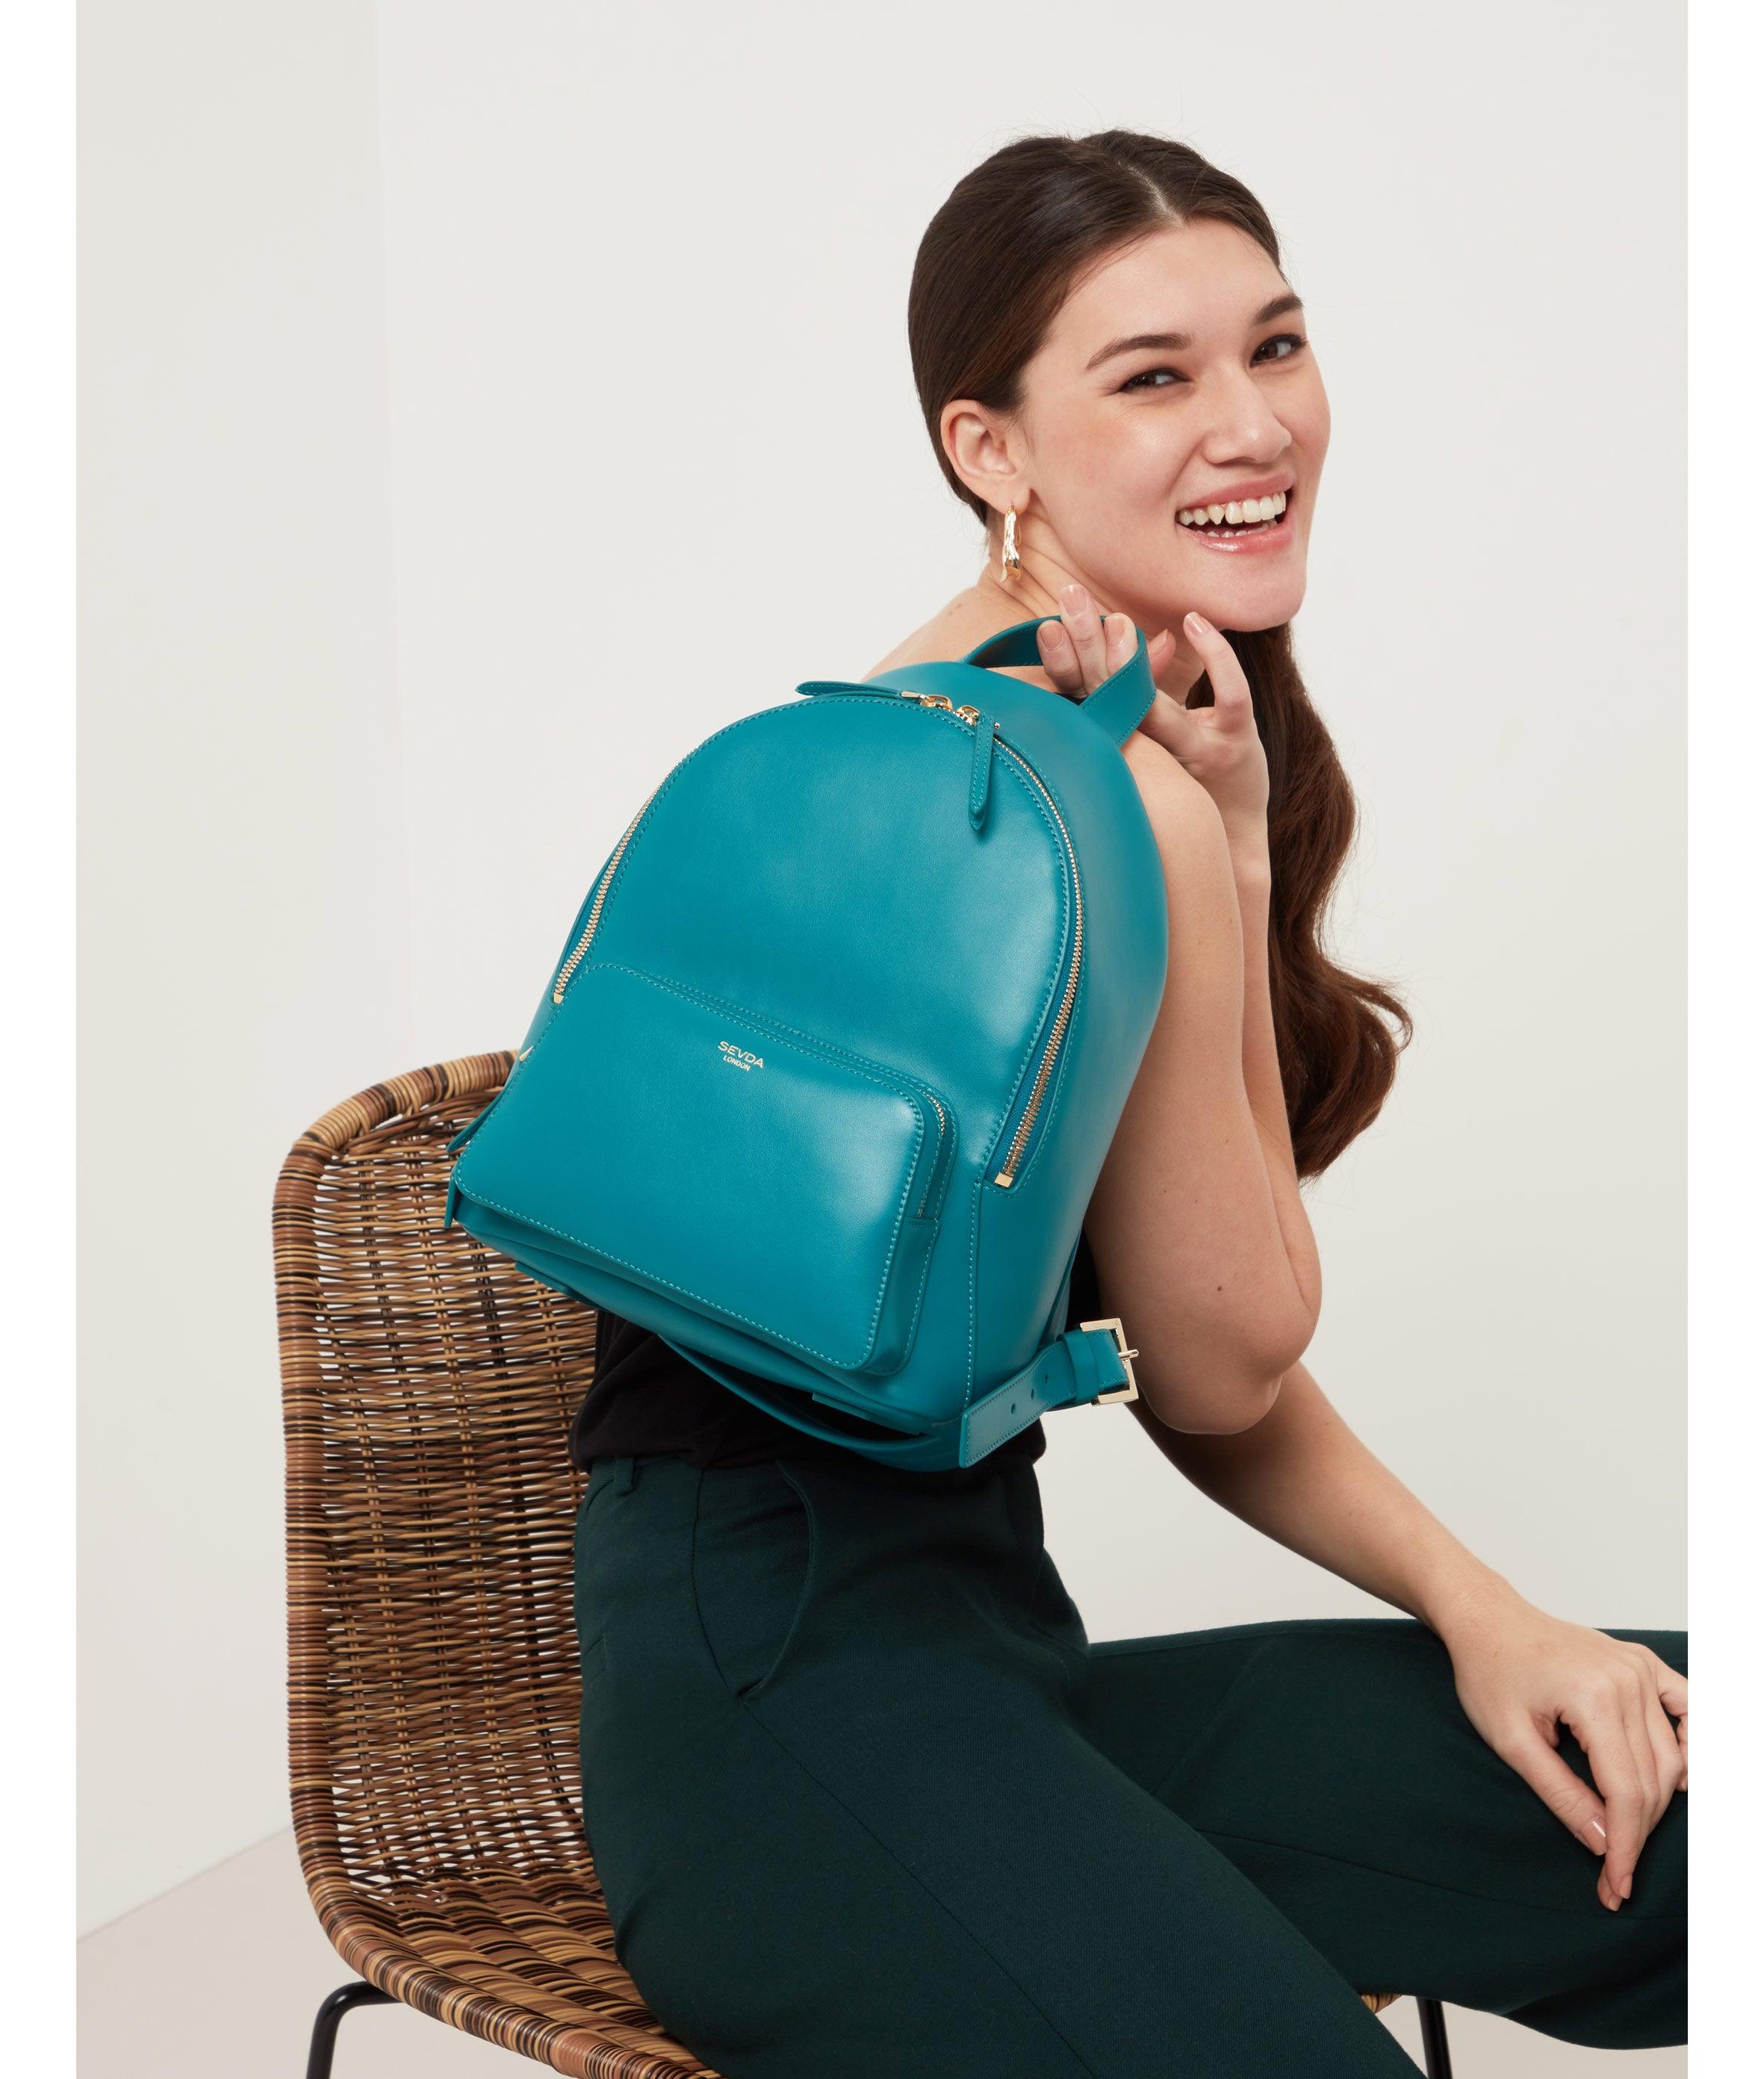 Emerald Green Designer Backpack - Where London's fashion meets Italian craftsmanship.